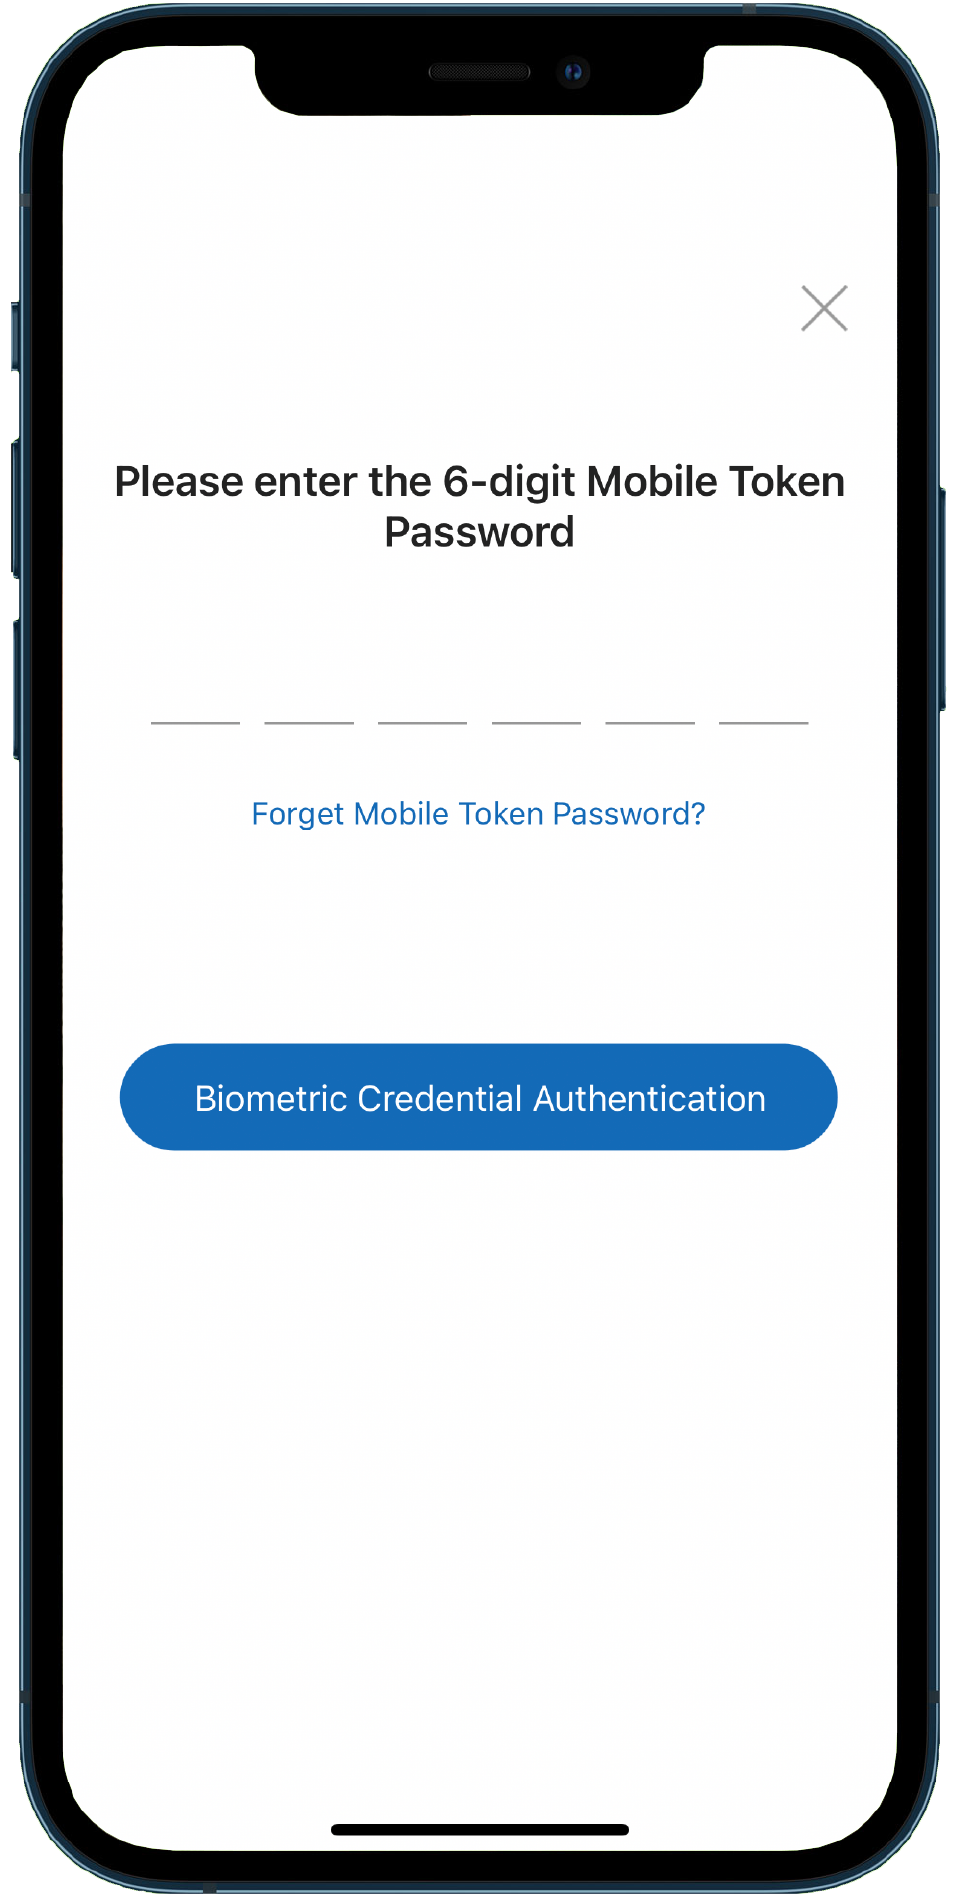 Mobile Token works on Mobile Banking